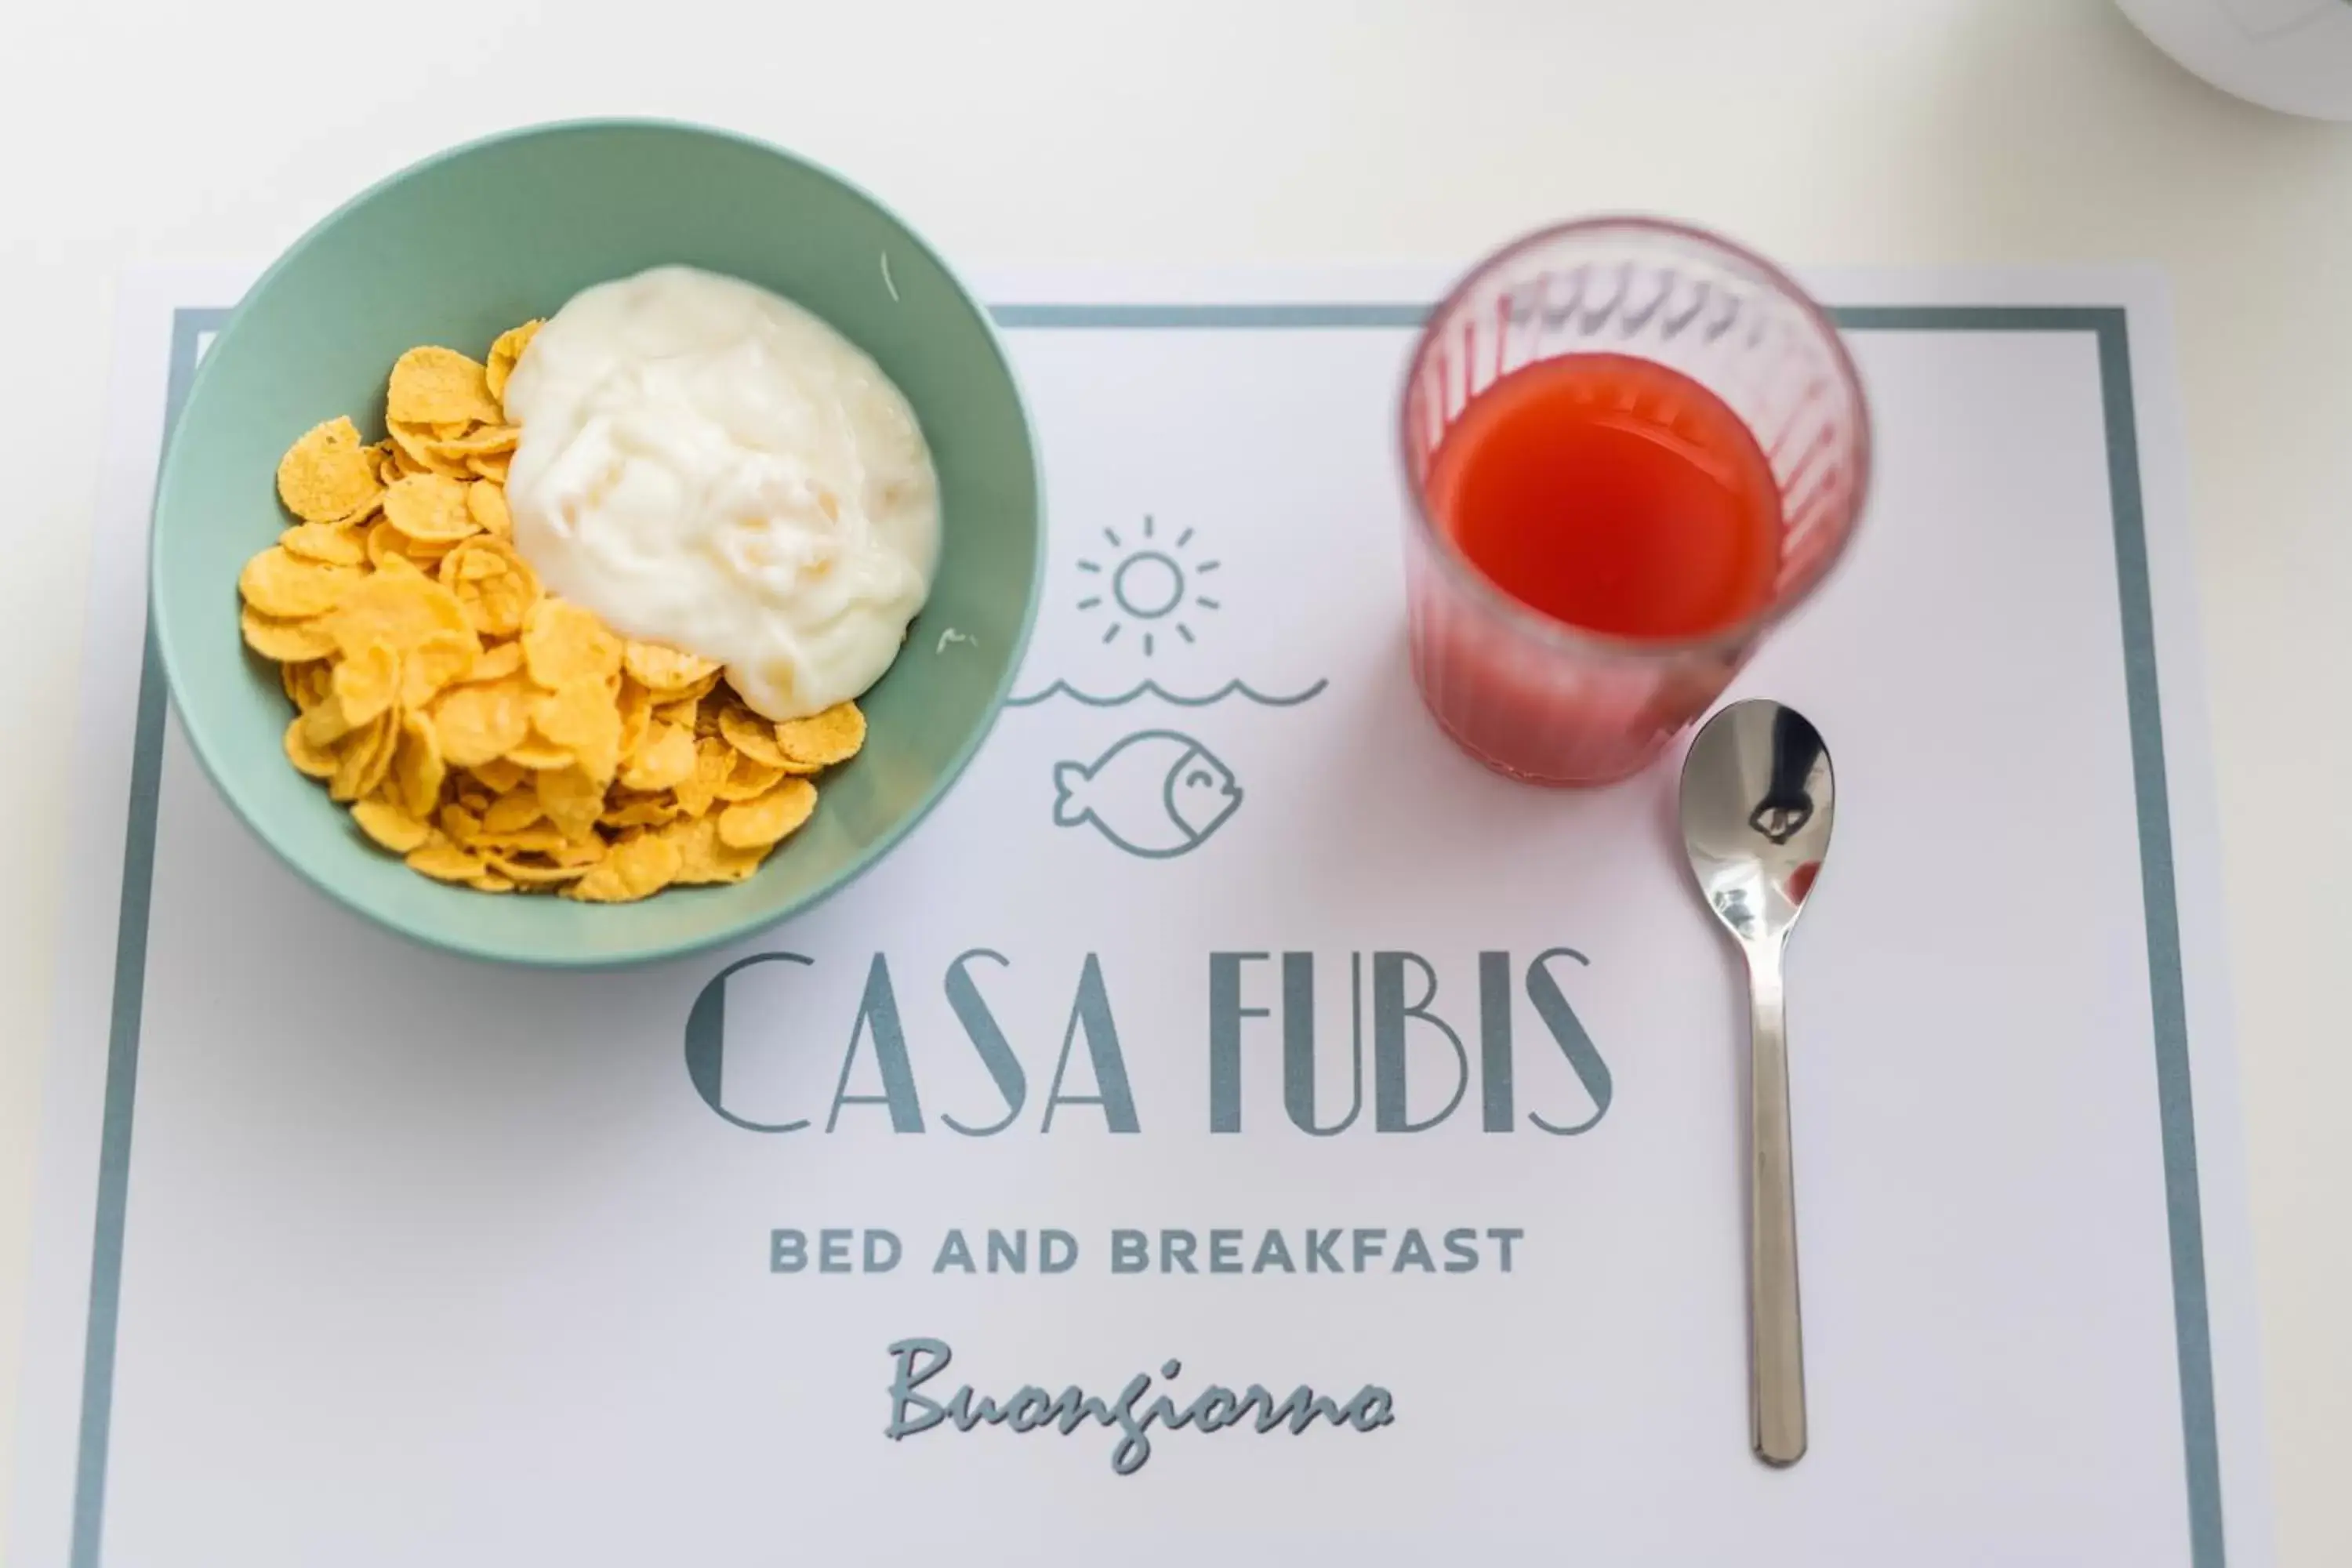 Breakfast in Casa Fubis